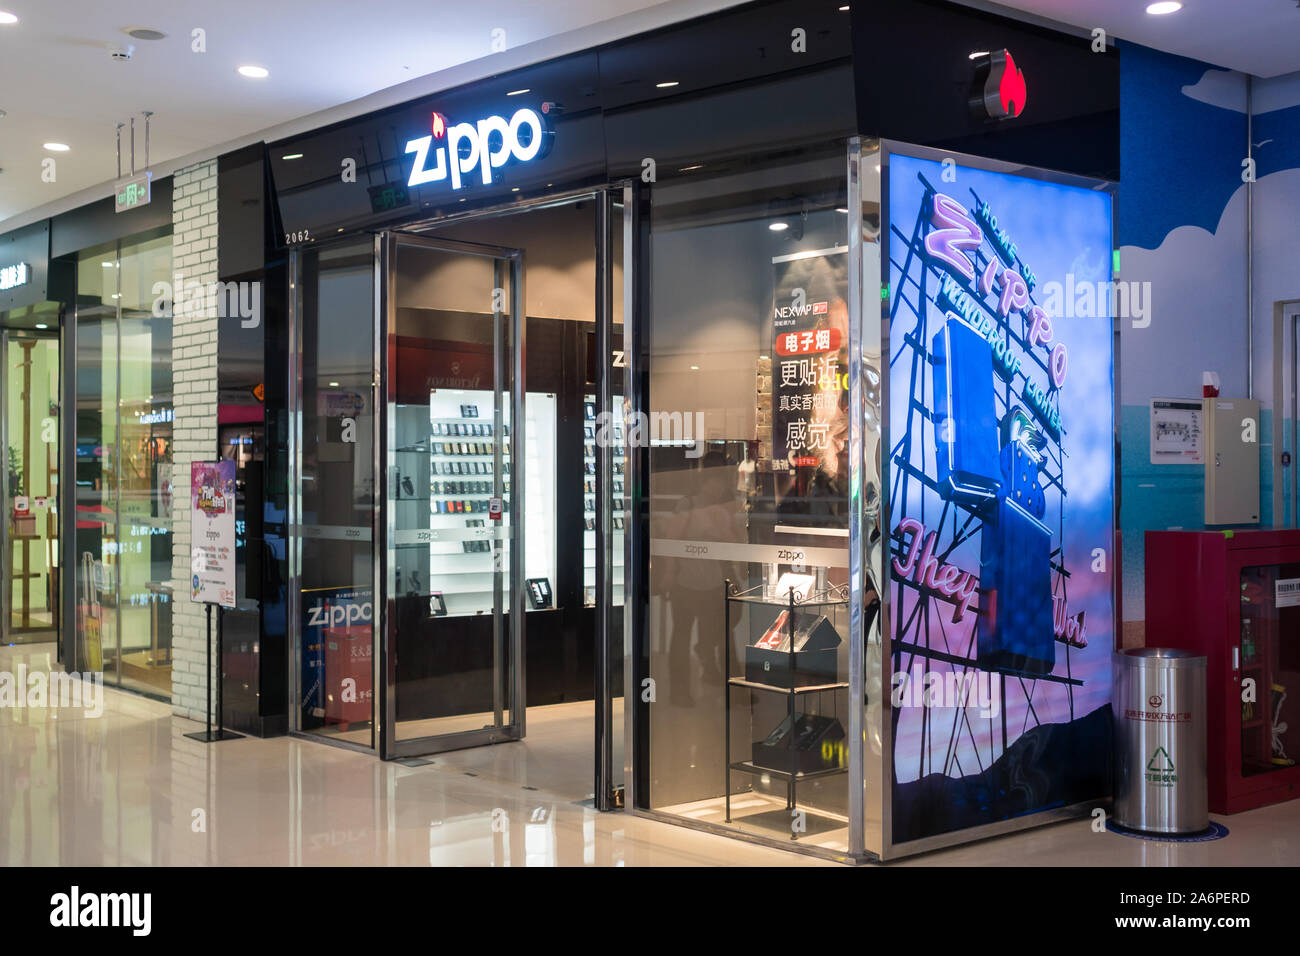 Zippo lighters shops in chinese mall Dalian, China 13-06-19 Stock Photo -  Alamy